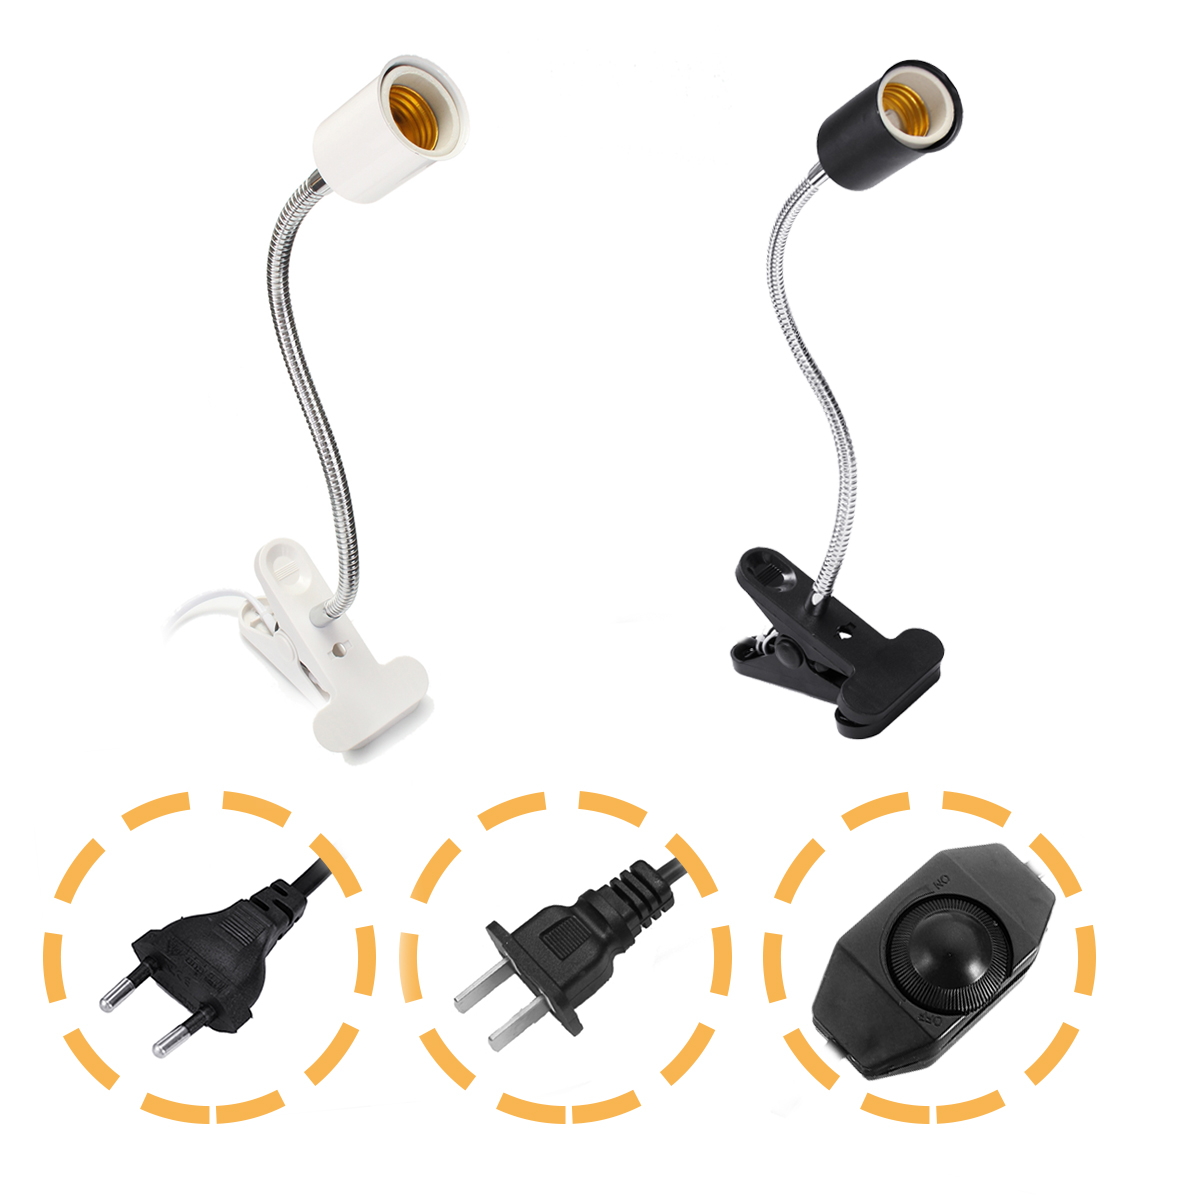 20CM-E27-Flexible-Bulb-Adapter-Lampholder-Socket-with-Clip-Dimming-Switch-EU-US-Plug-for-Pet-Light-1309747-1